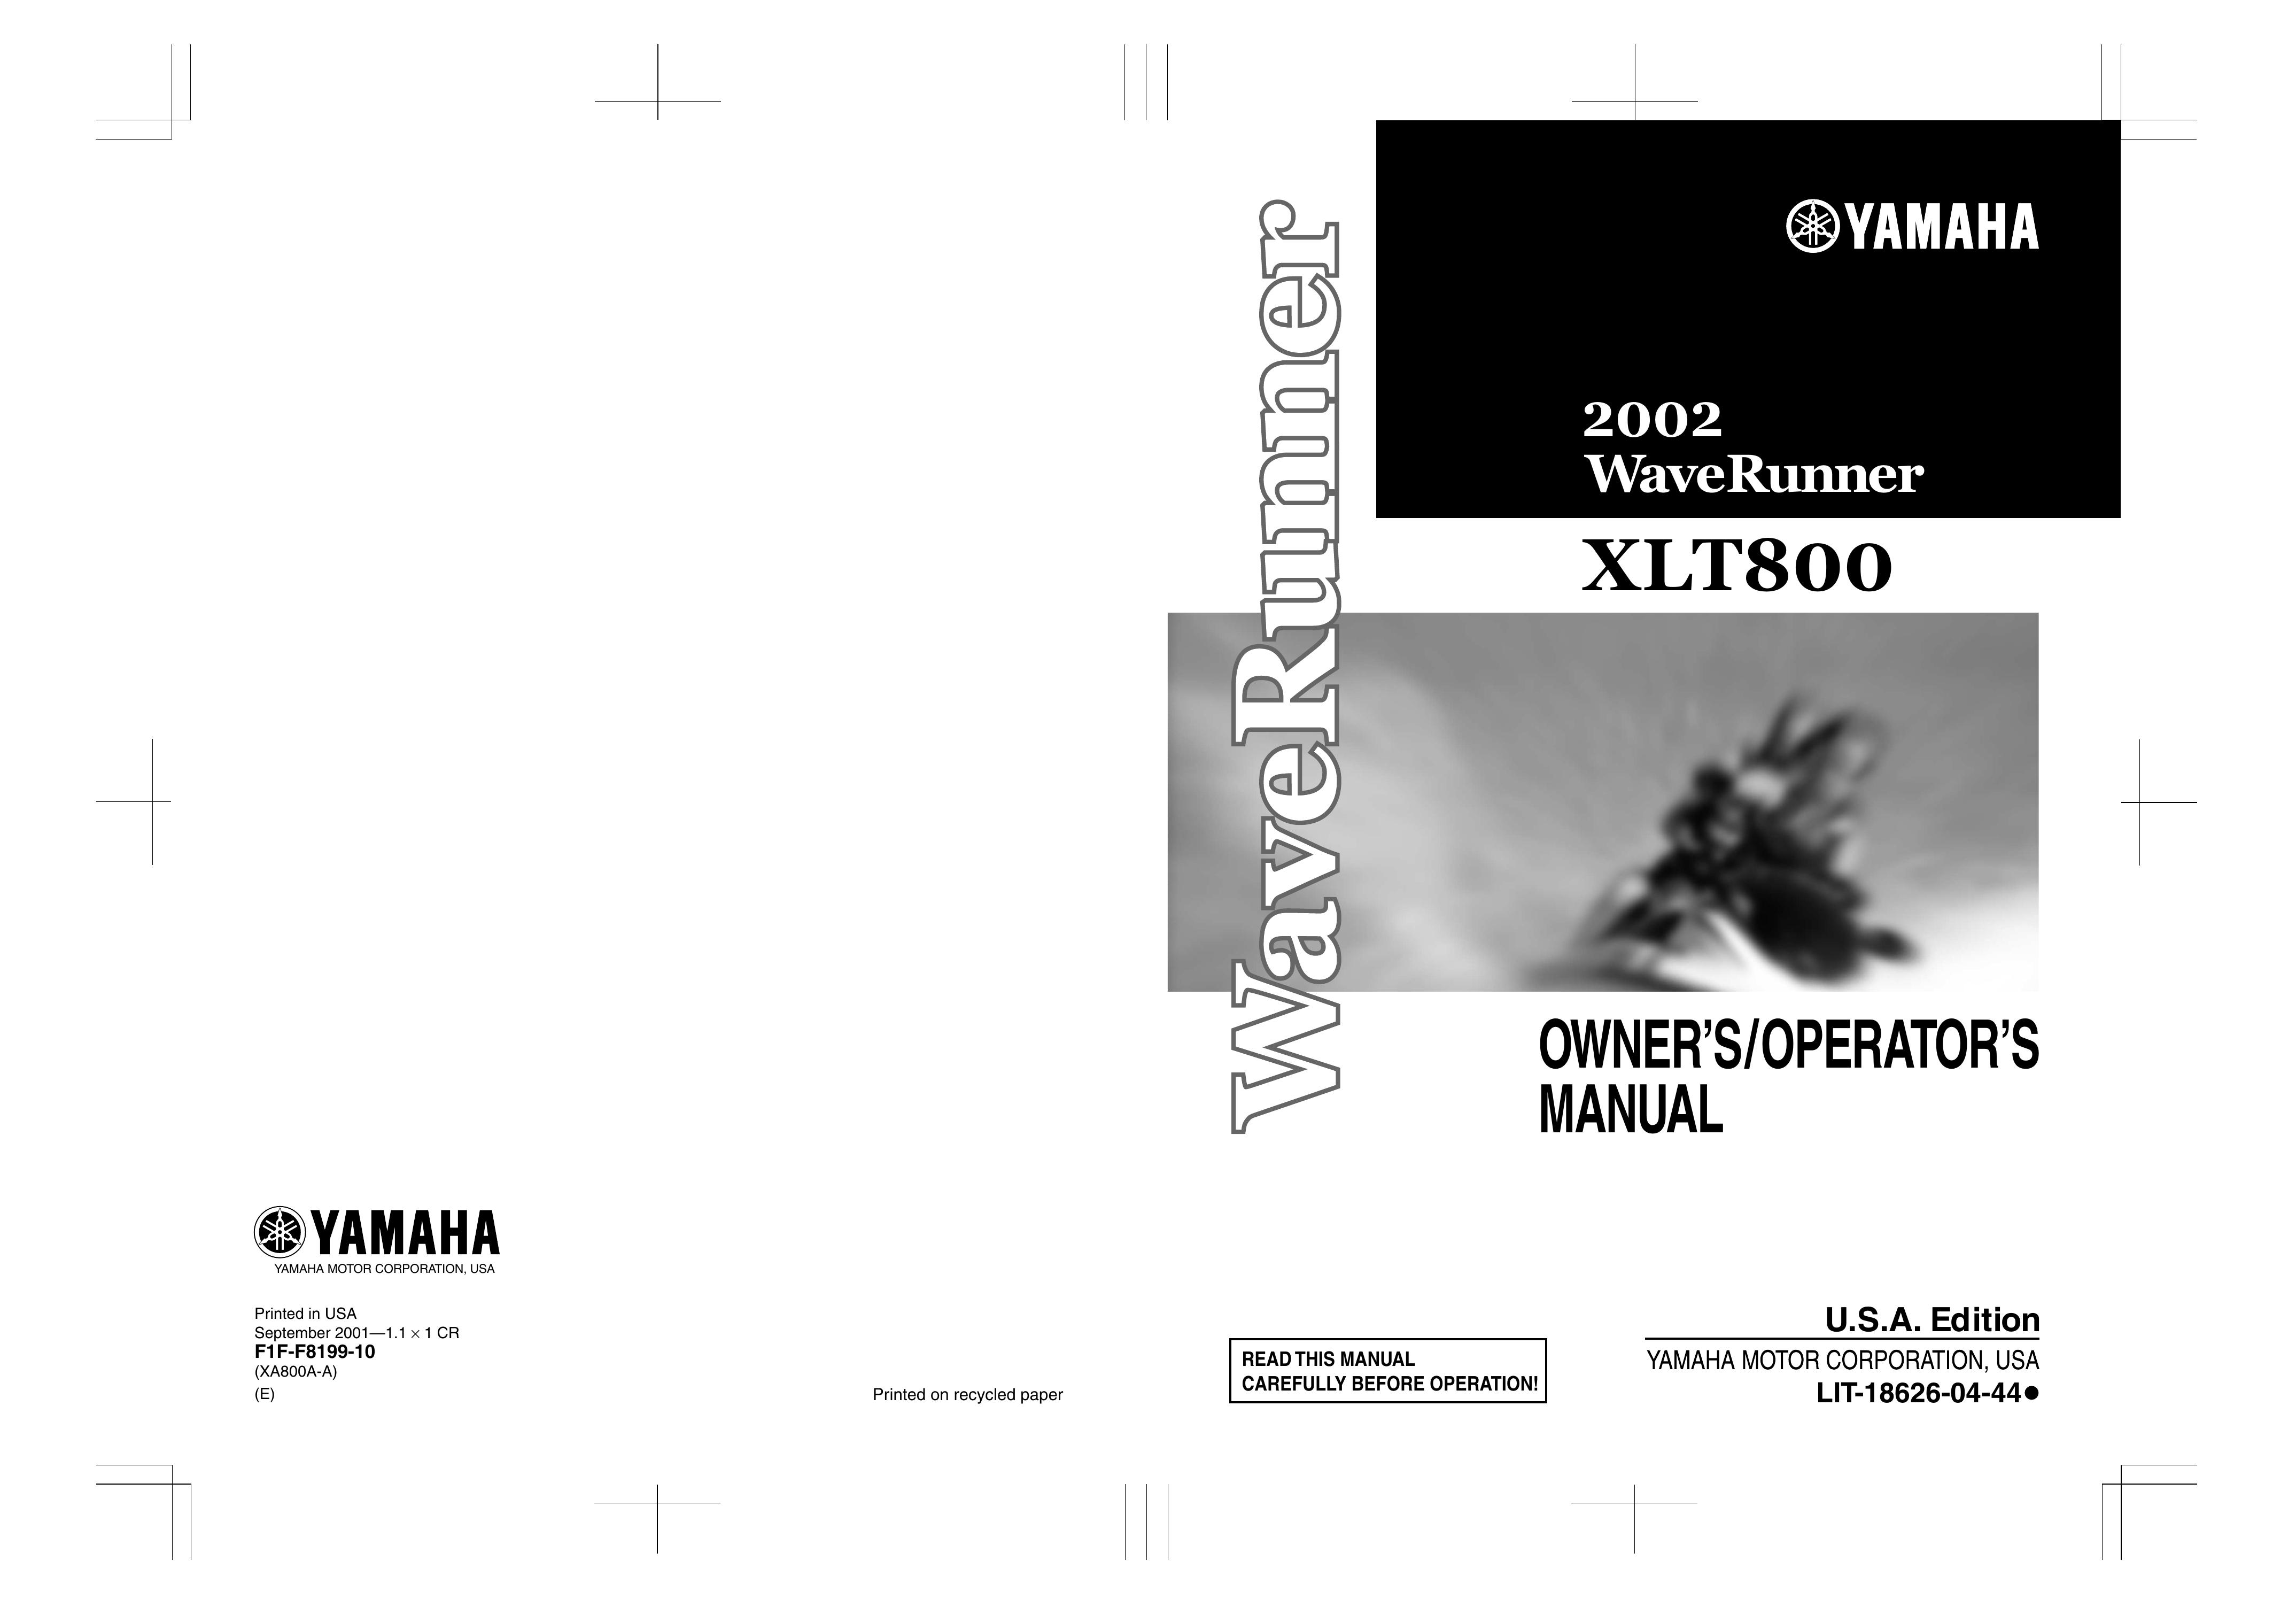 Yamaha XLT800 Waterskis User Manual